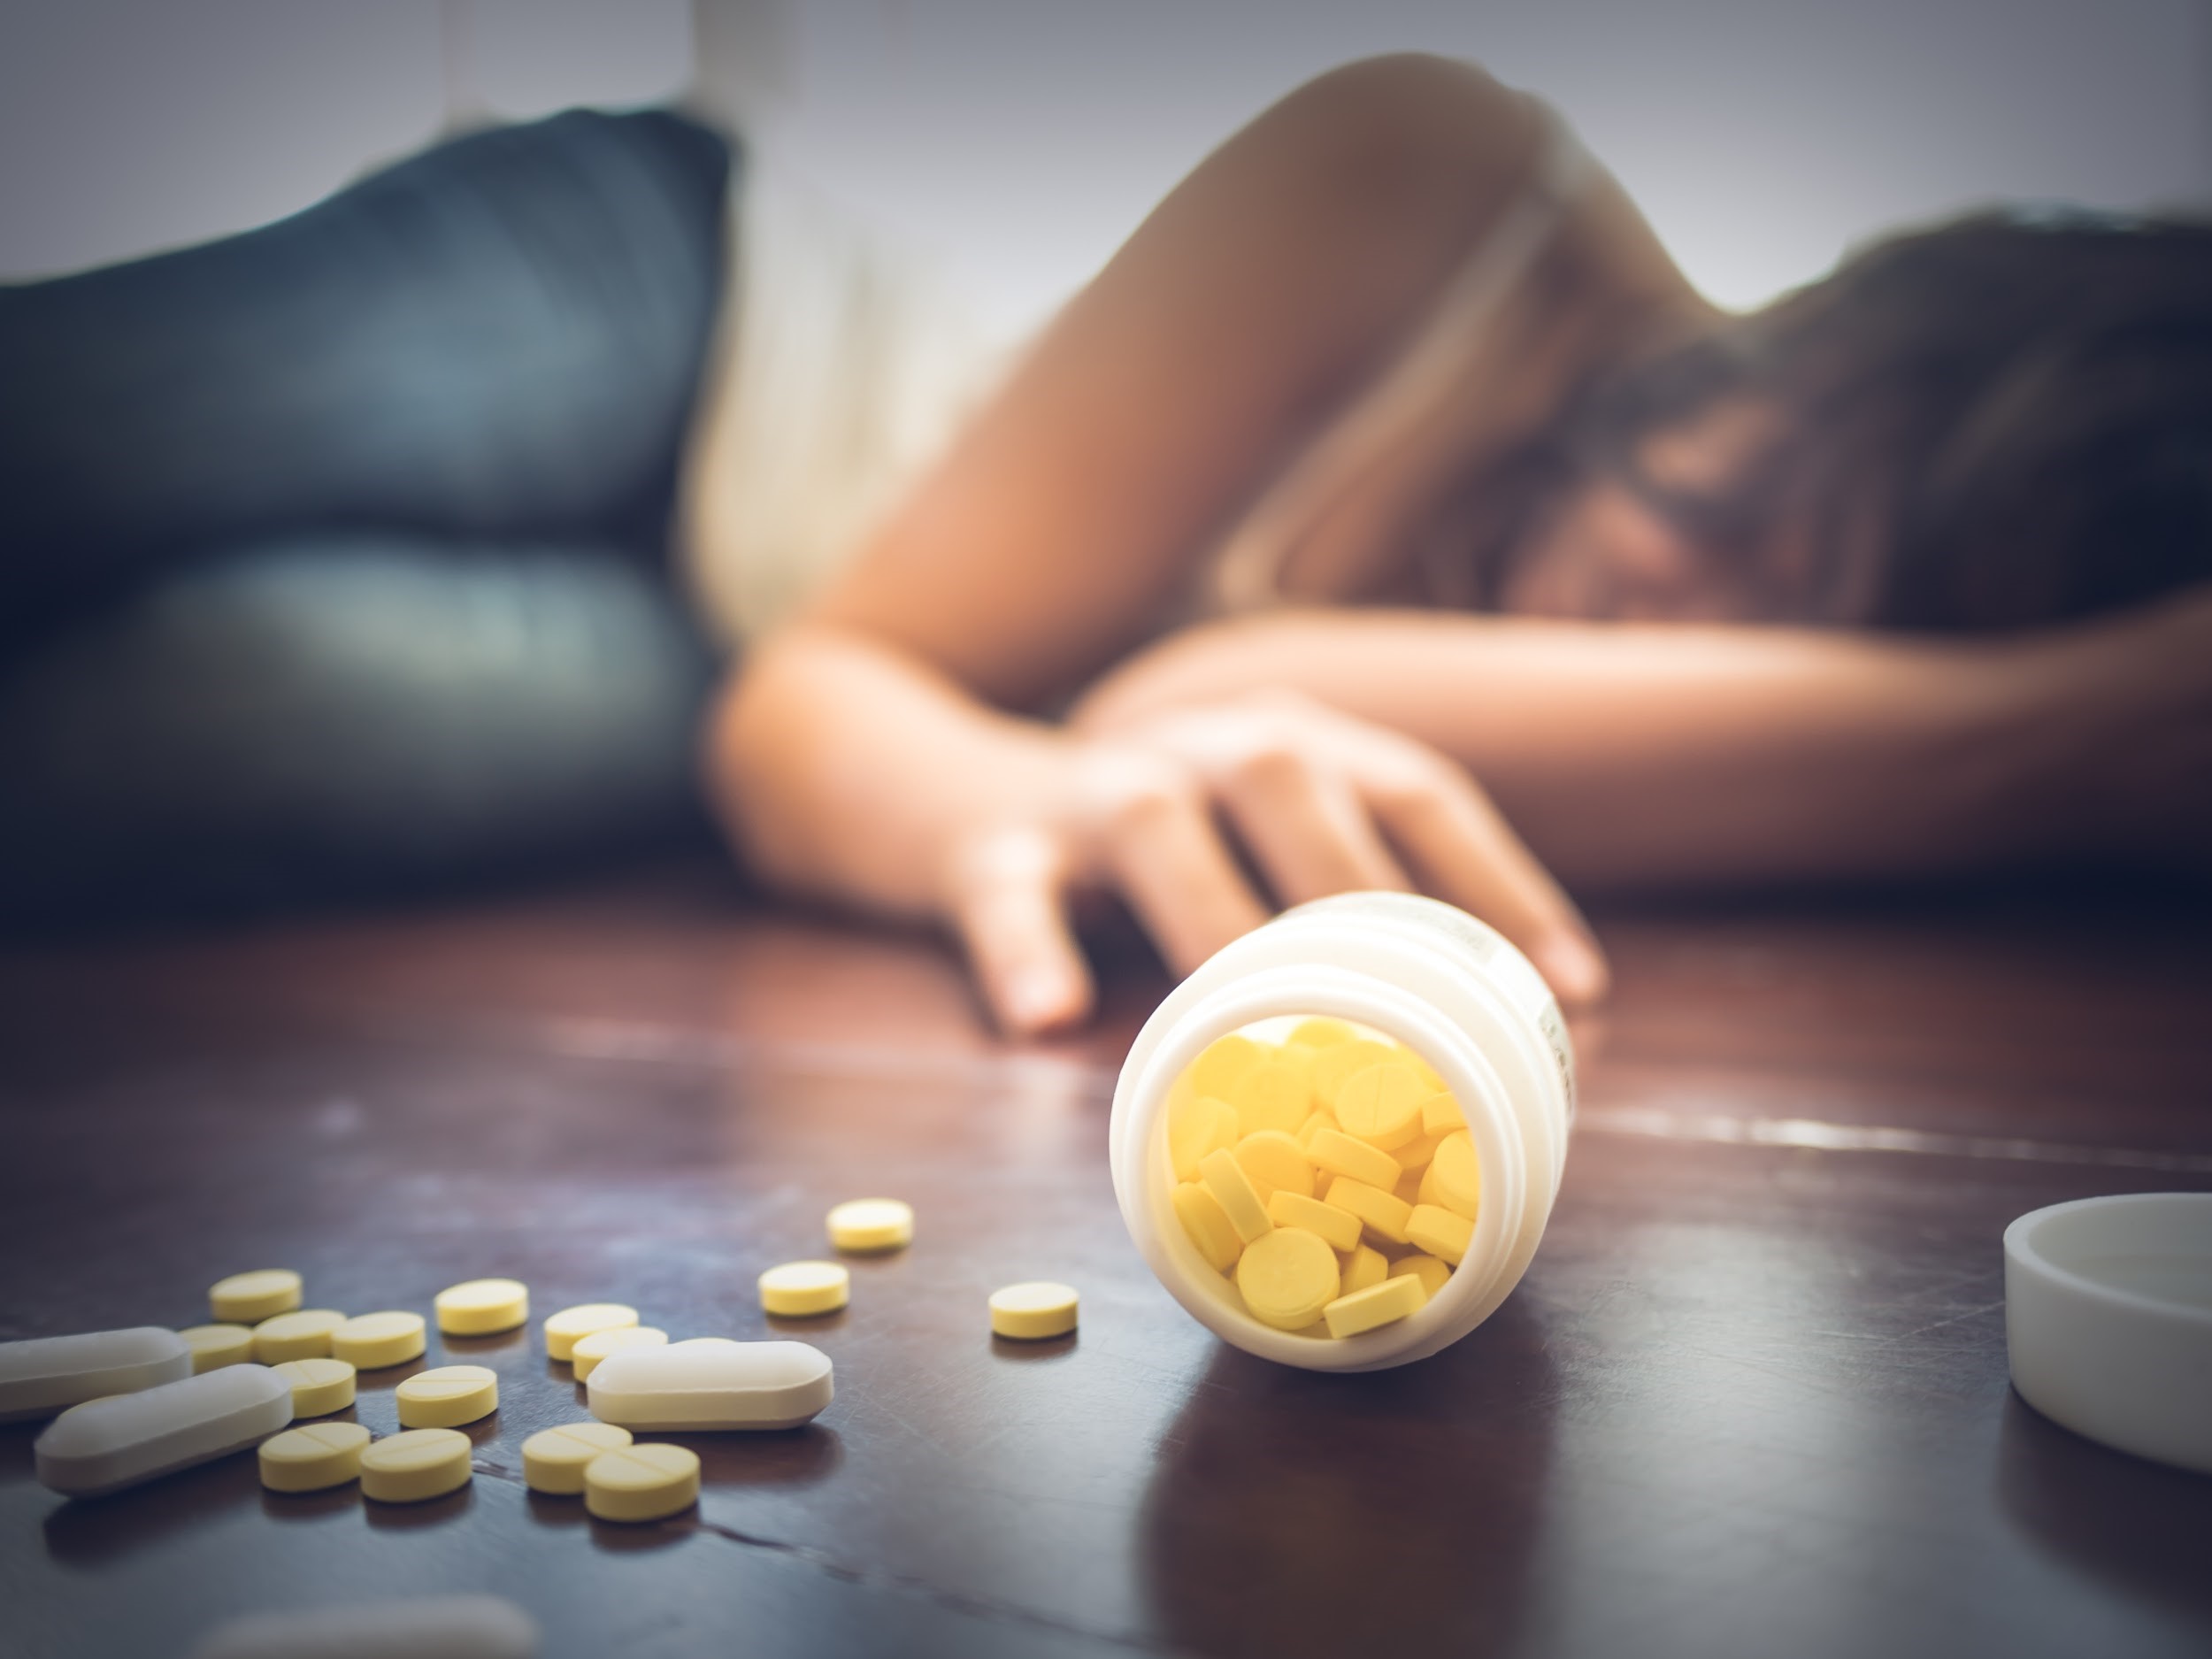 Risks of Paxipam Overdose